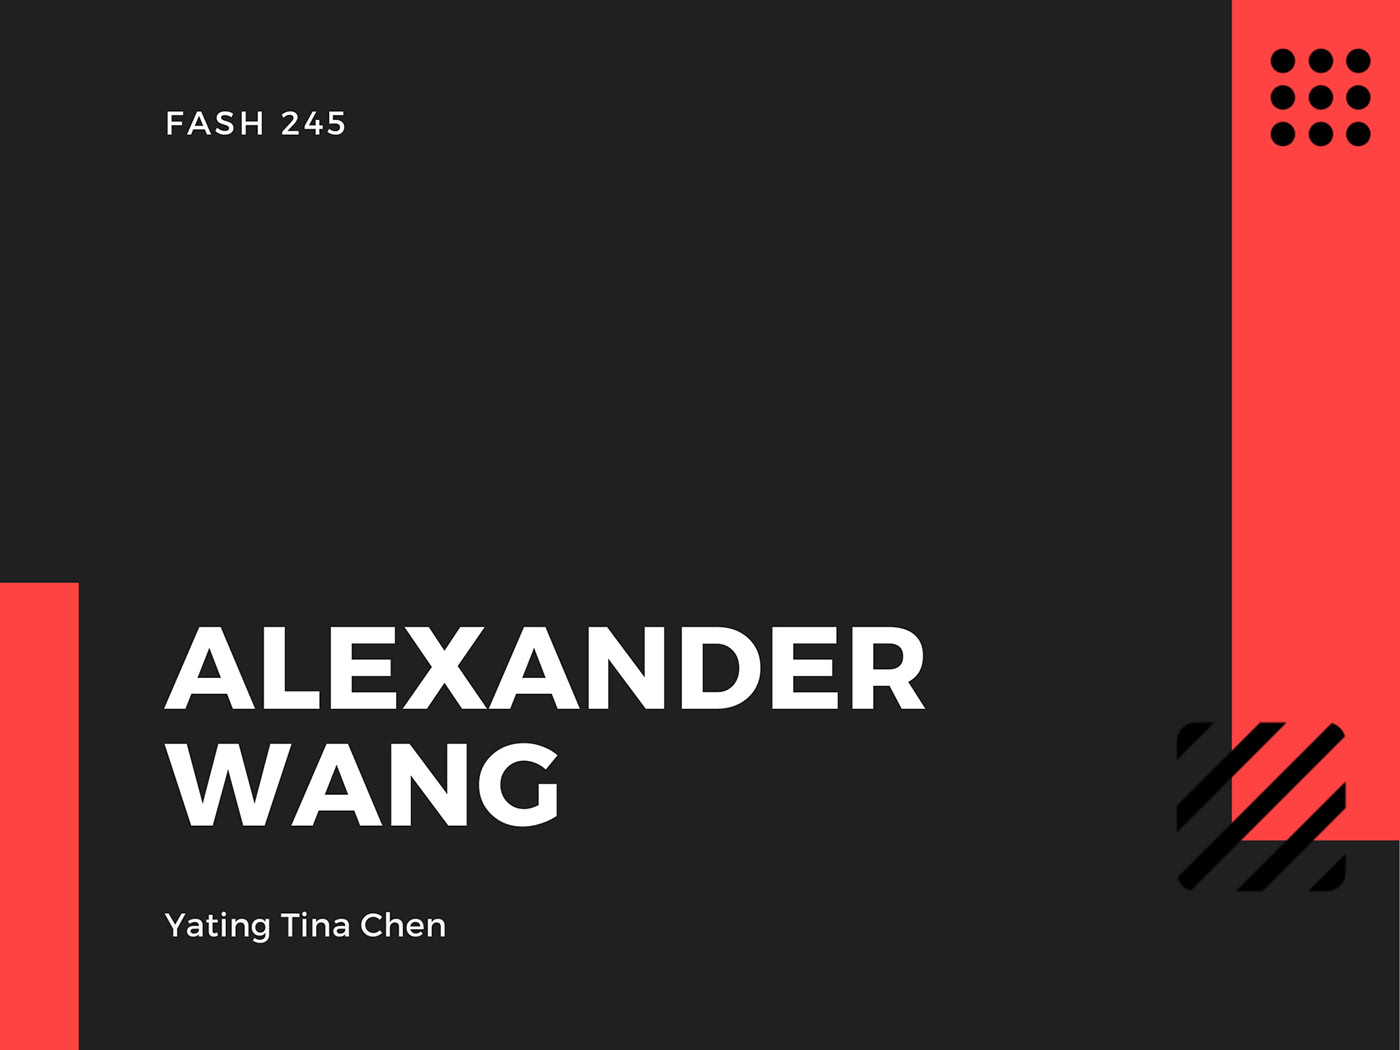 Alexander wang Fashion 